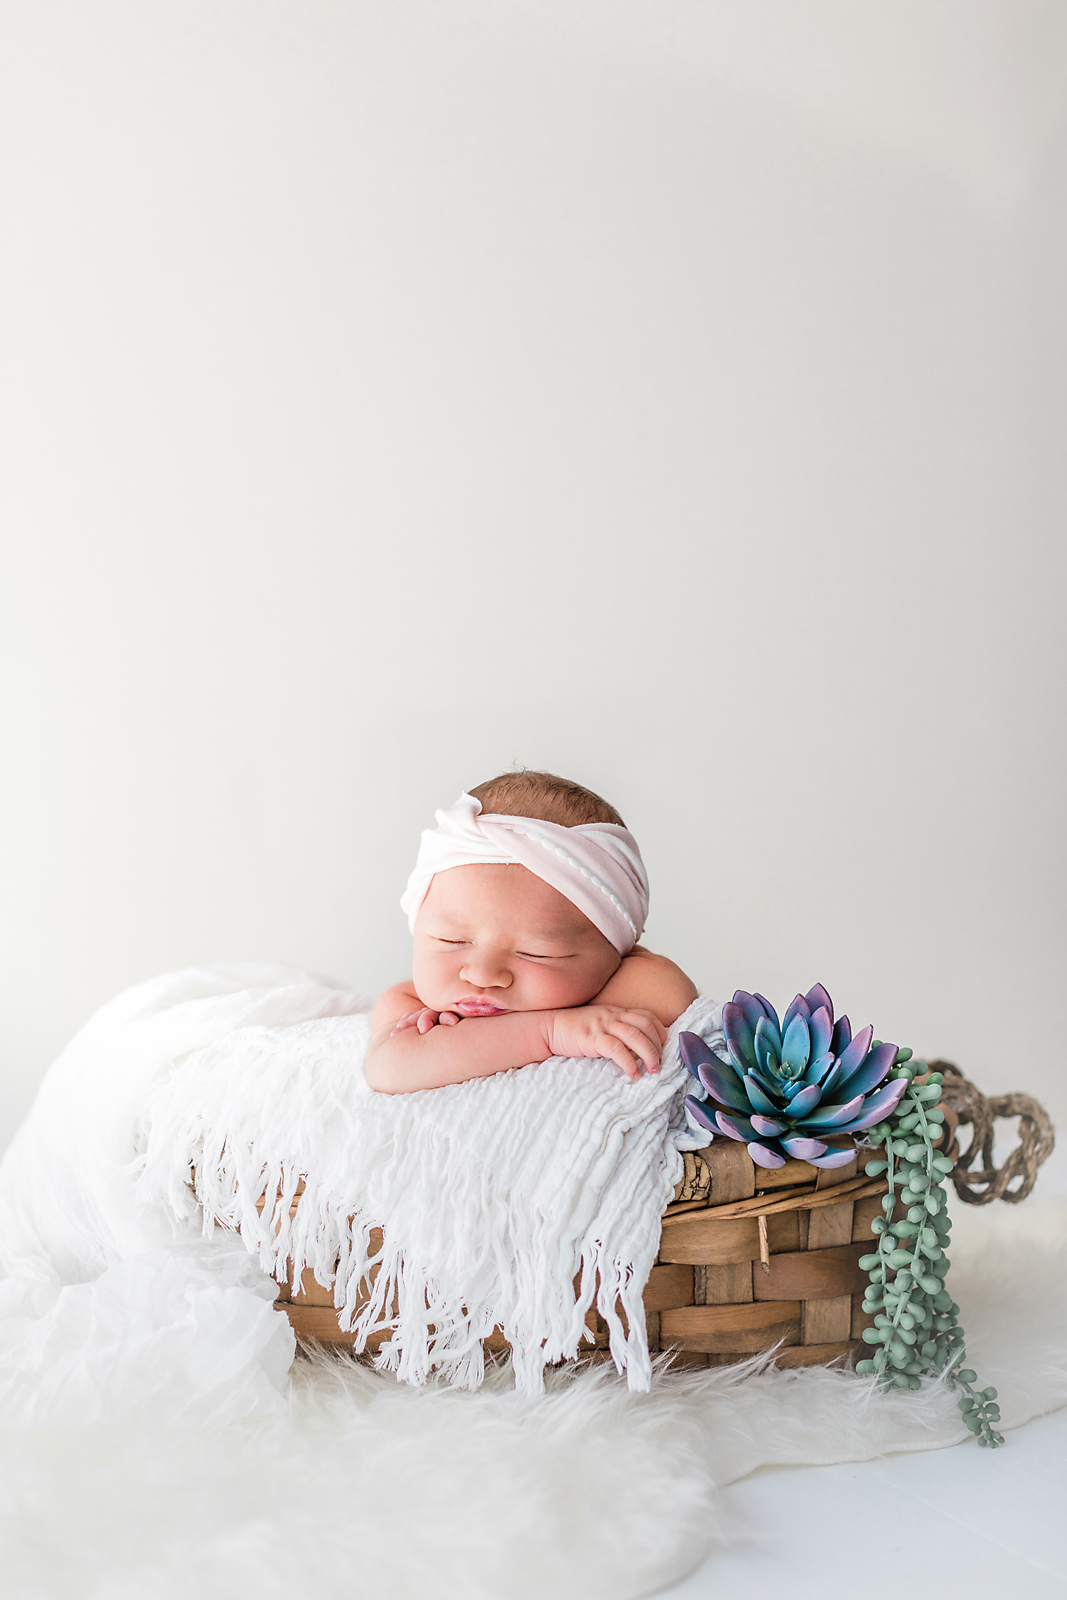 Halleigh Hill Photography, Costa Mesa California Newborn Photographer, Newborn, Newborn Posing Ideas, Orange County Newborn Photographer, Boho baby inspo